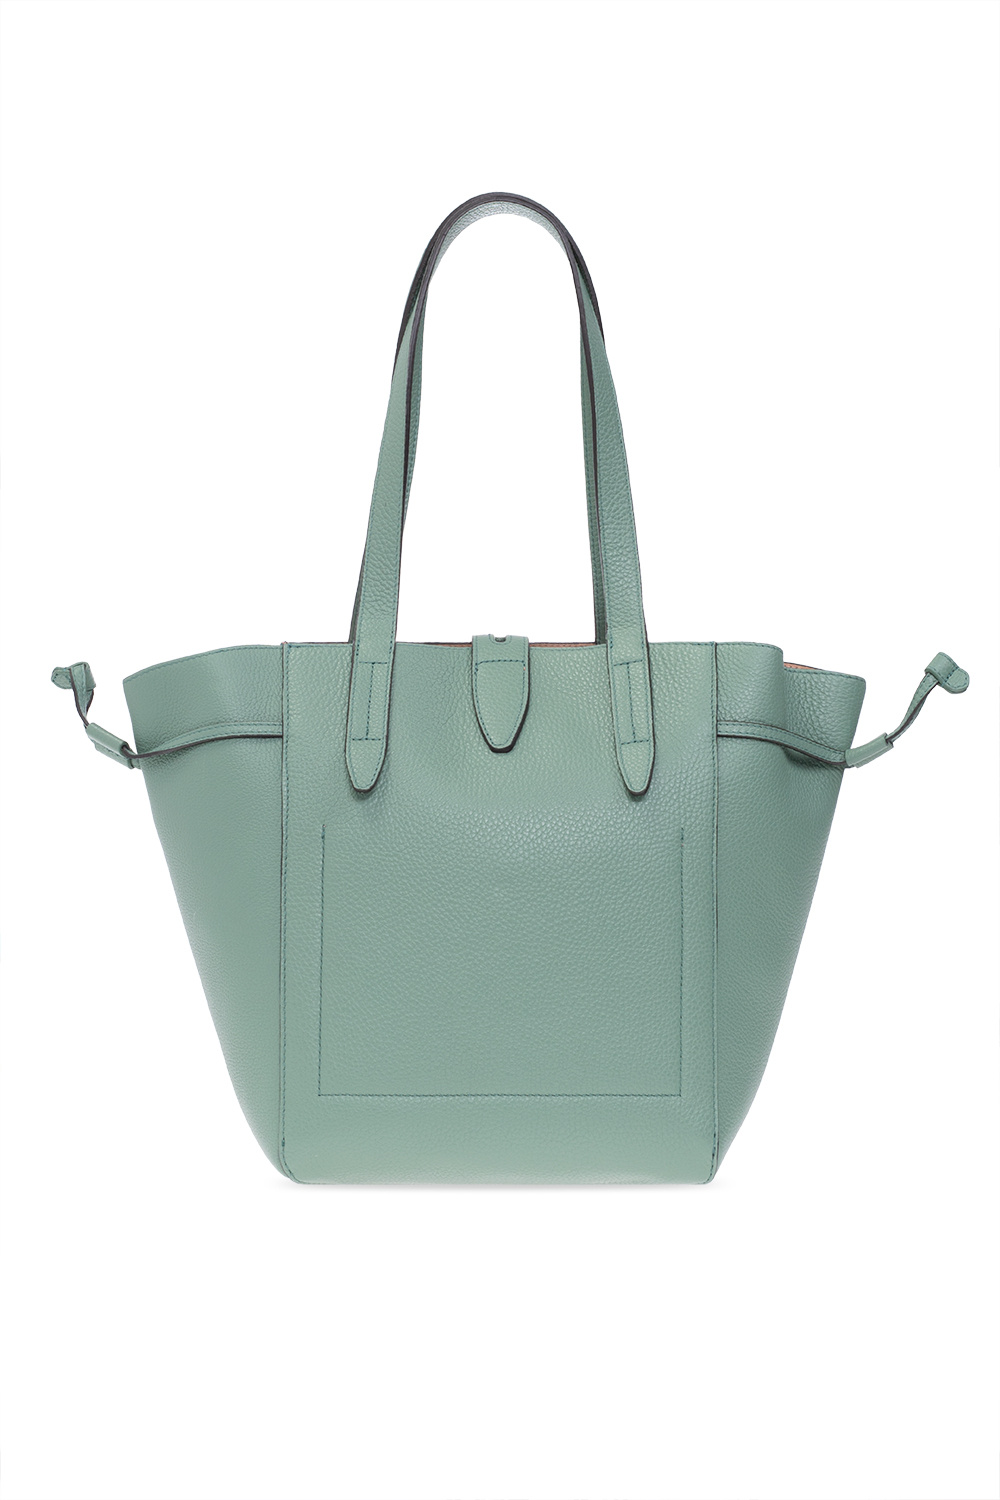 FURLA FURLA NET MINI TOTE, Dark green Women's Handbag